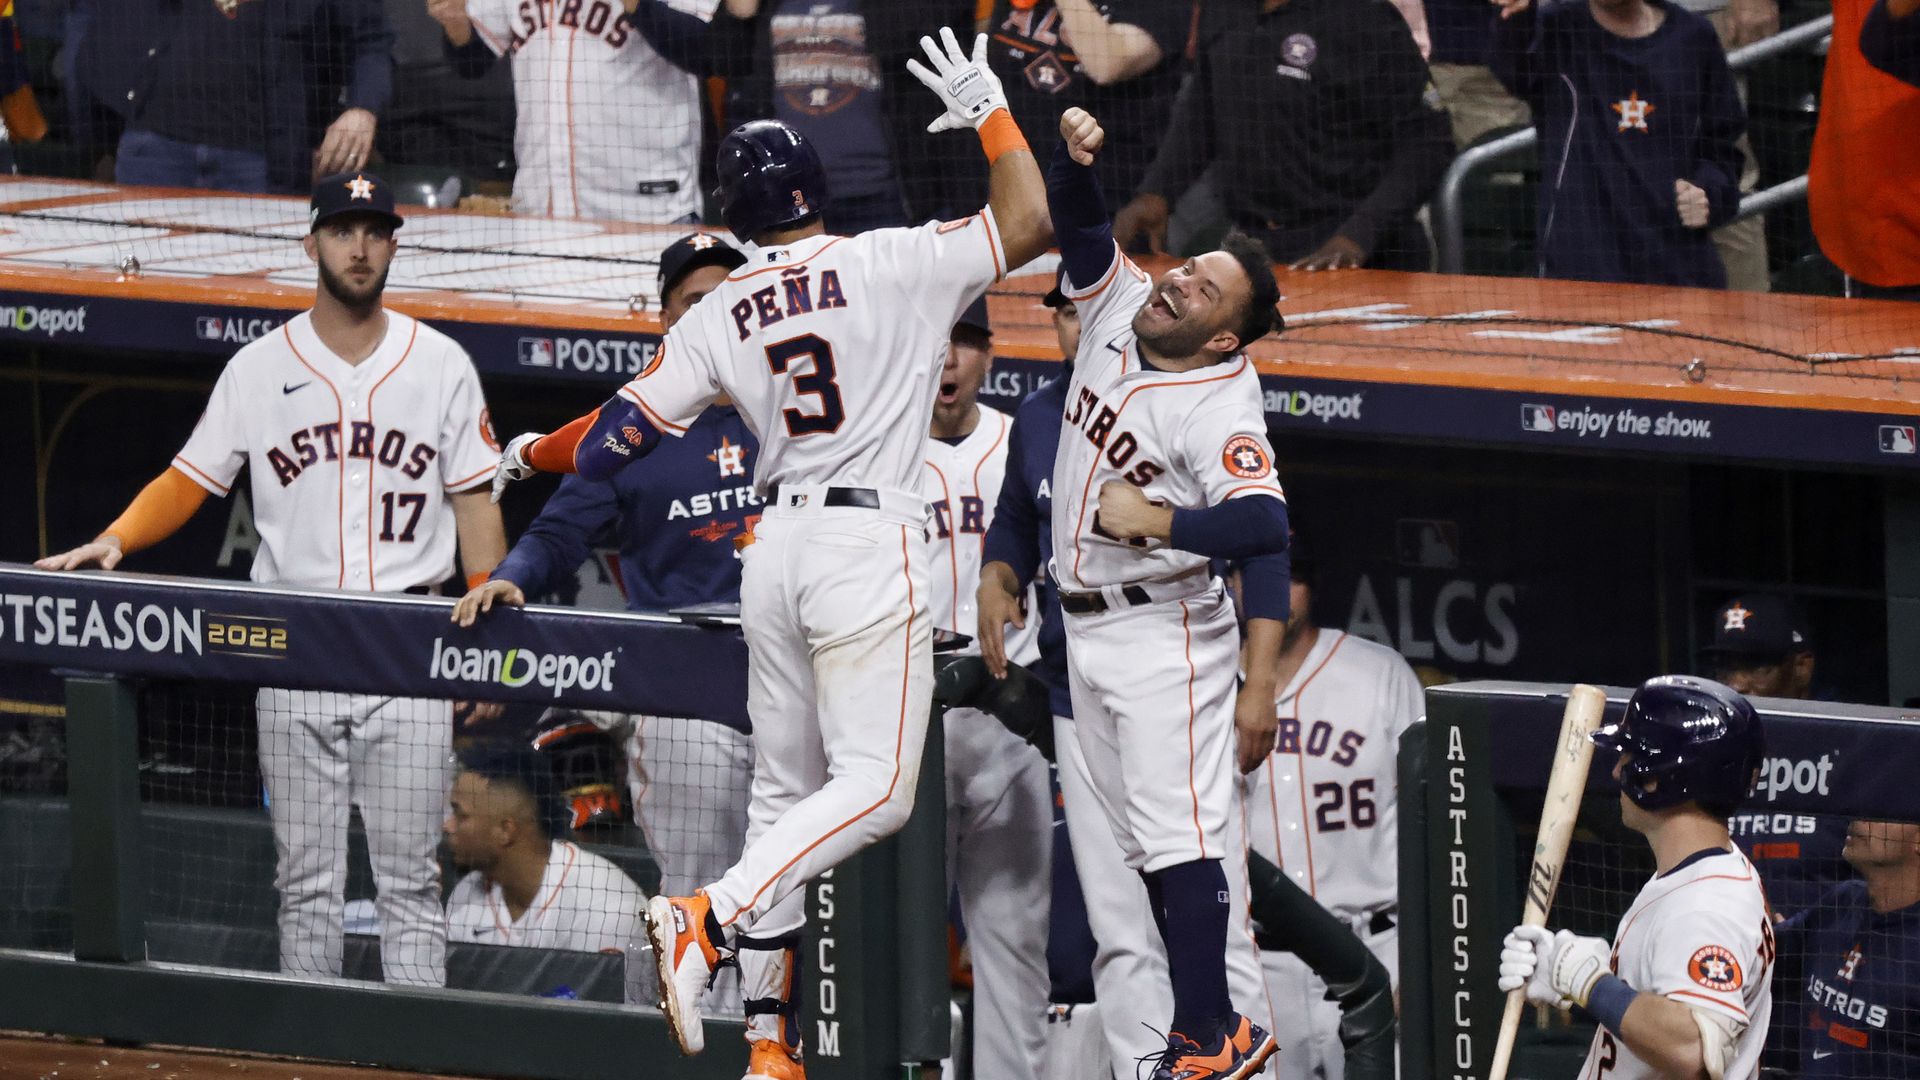 Astros stars Jeremy Peña and Jose Altuve jump in celebration after a hit